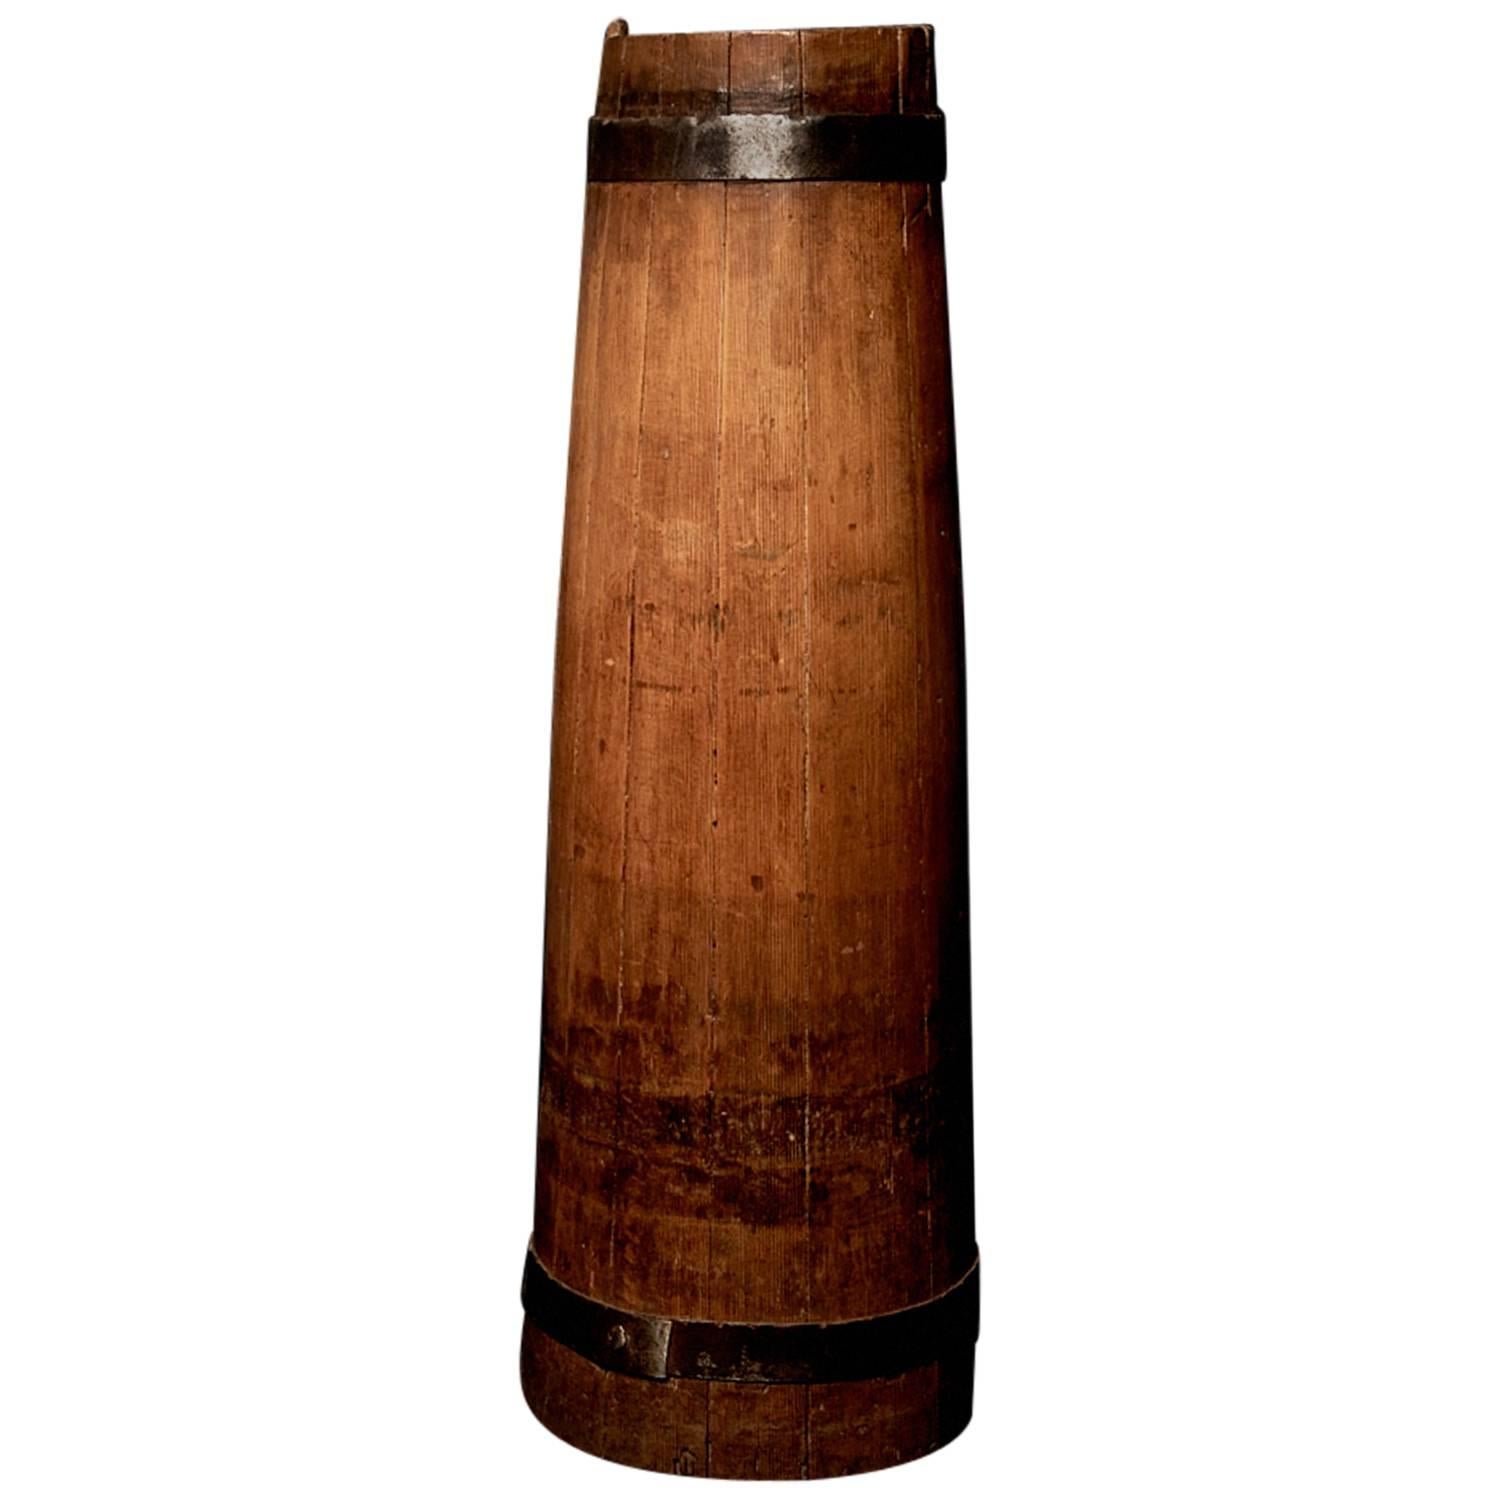 Wonderful English Handcrafted Wooden Barrel of Unusual Shape, 19th Century